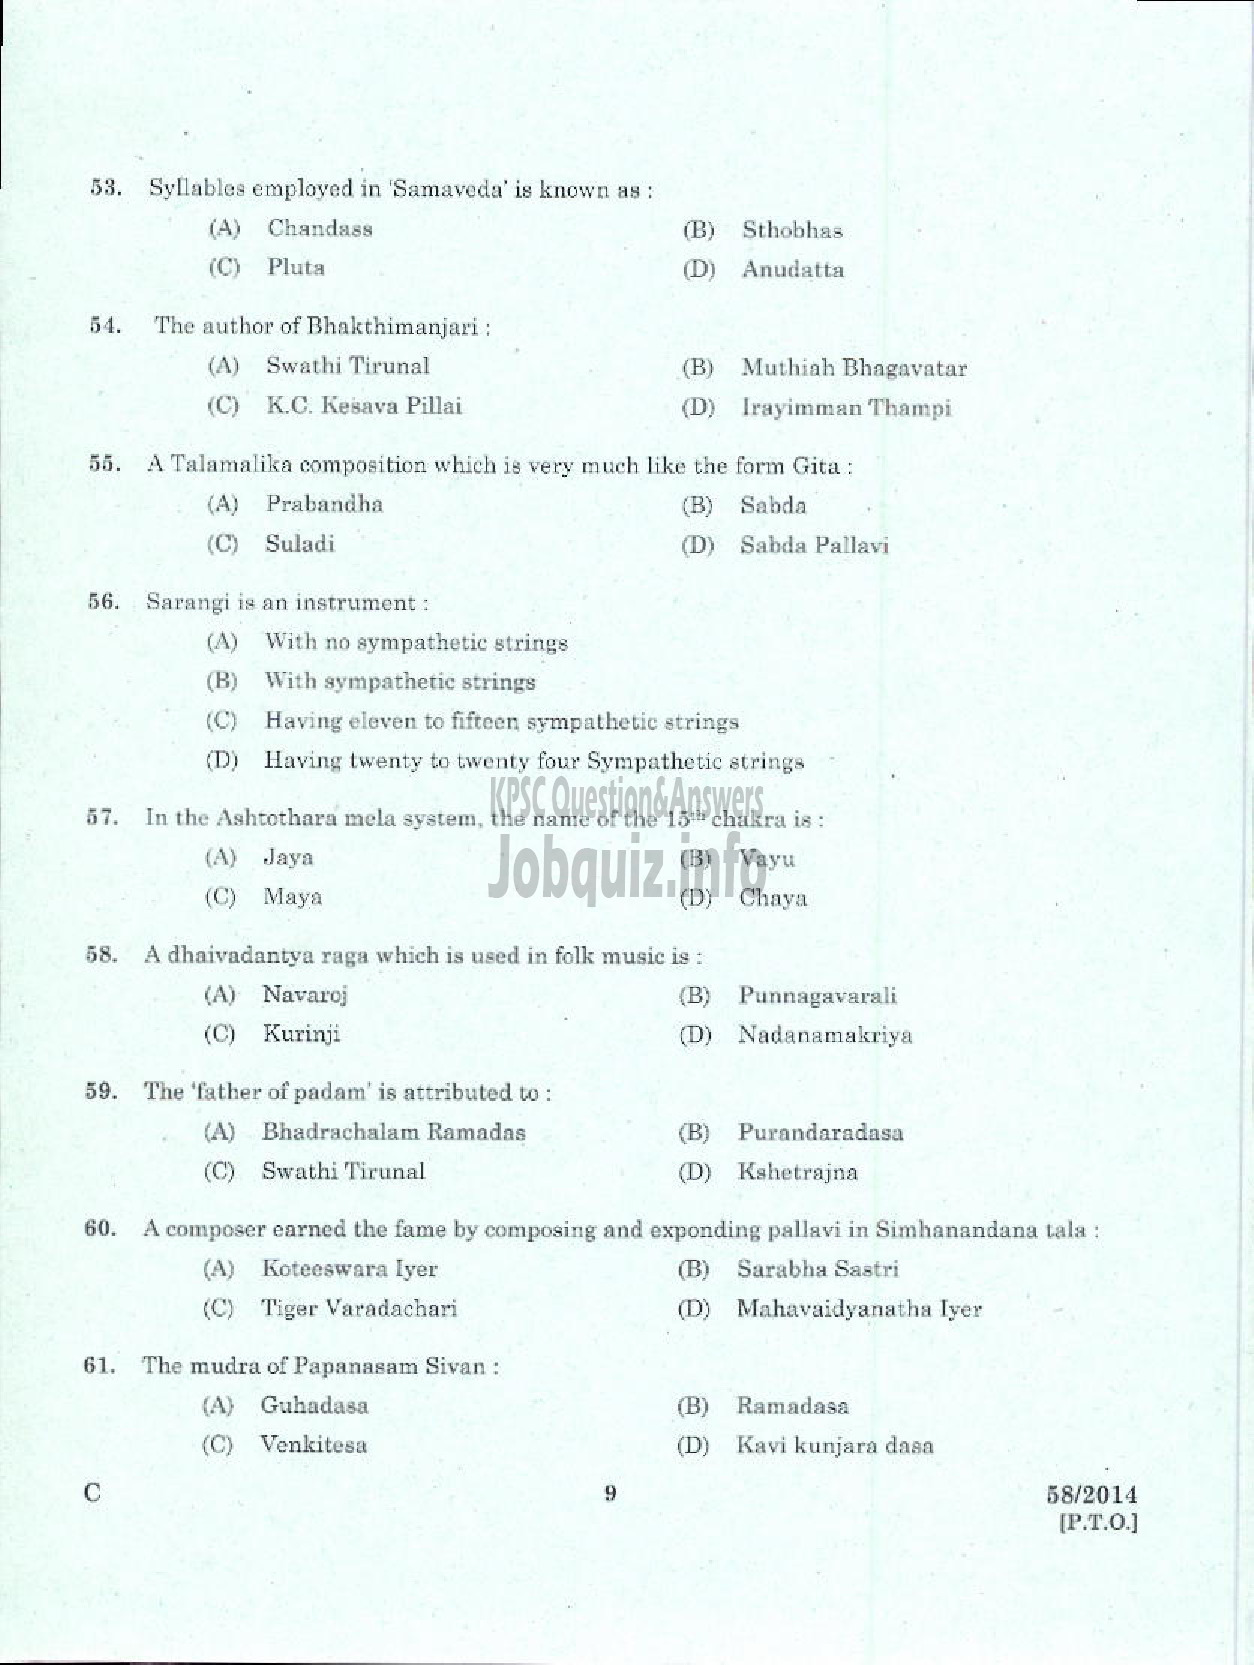 Kerala PSC Question Paper - LECTURER IN MUSIC KERALA COLLEGIATE EDUCATION-7